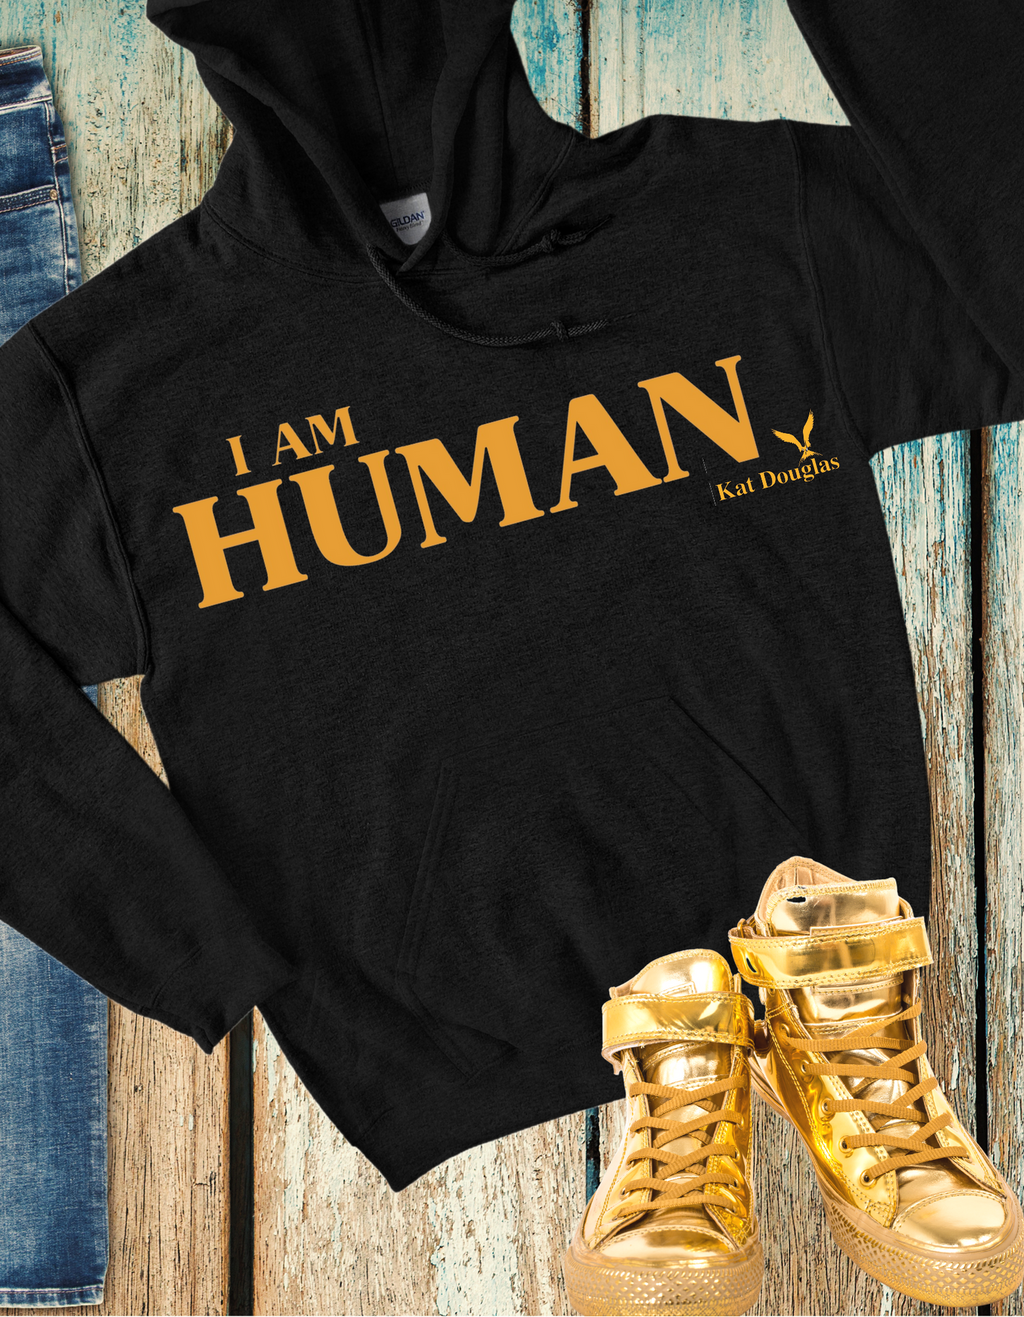 I AM HUMAN Hoodie Sweatshirt.